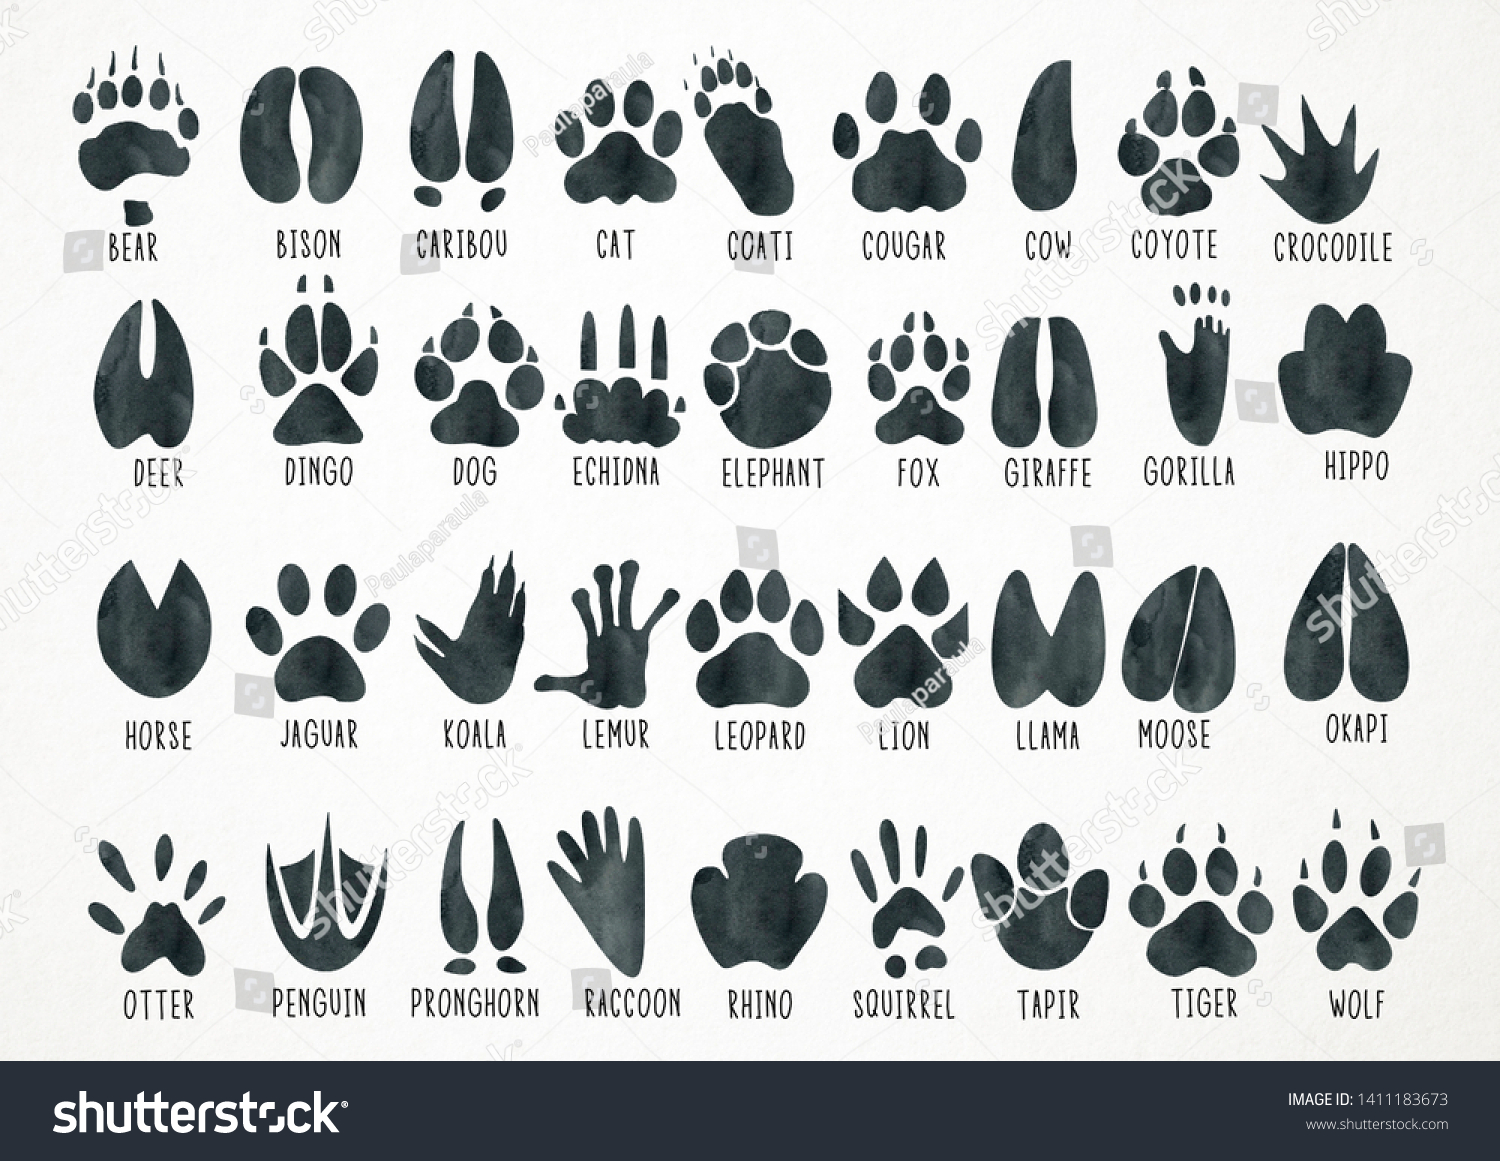 watercolor-animal-footprint-illustration-animals-footprint